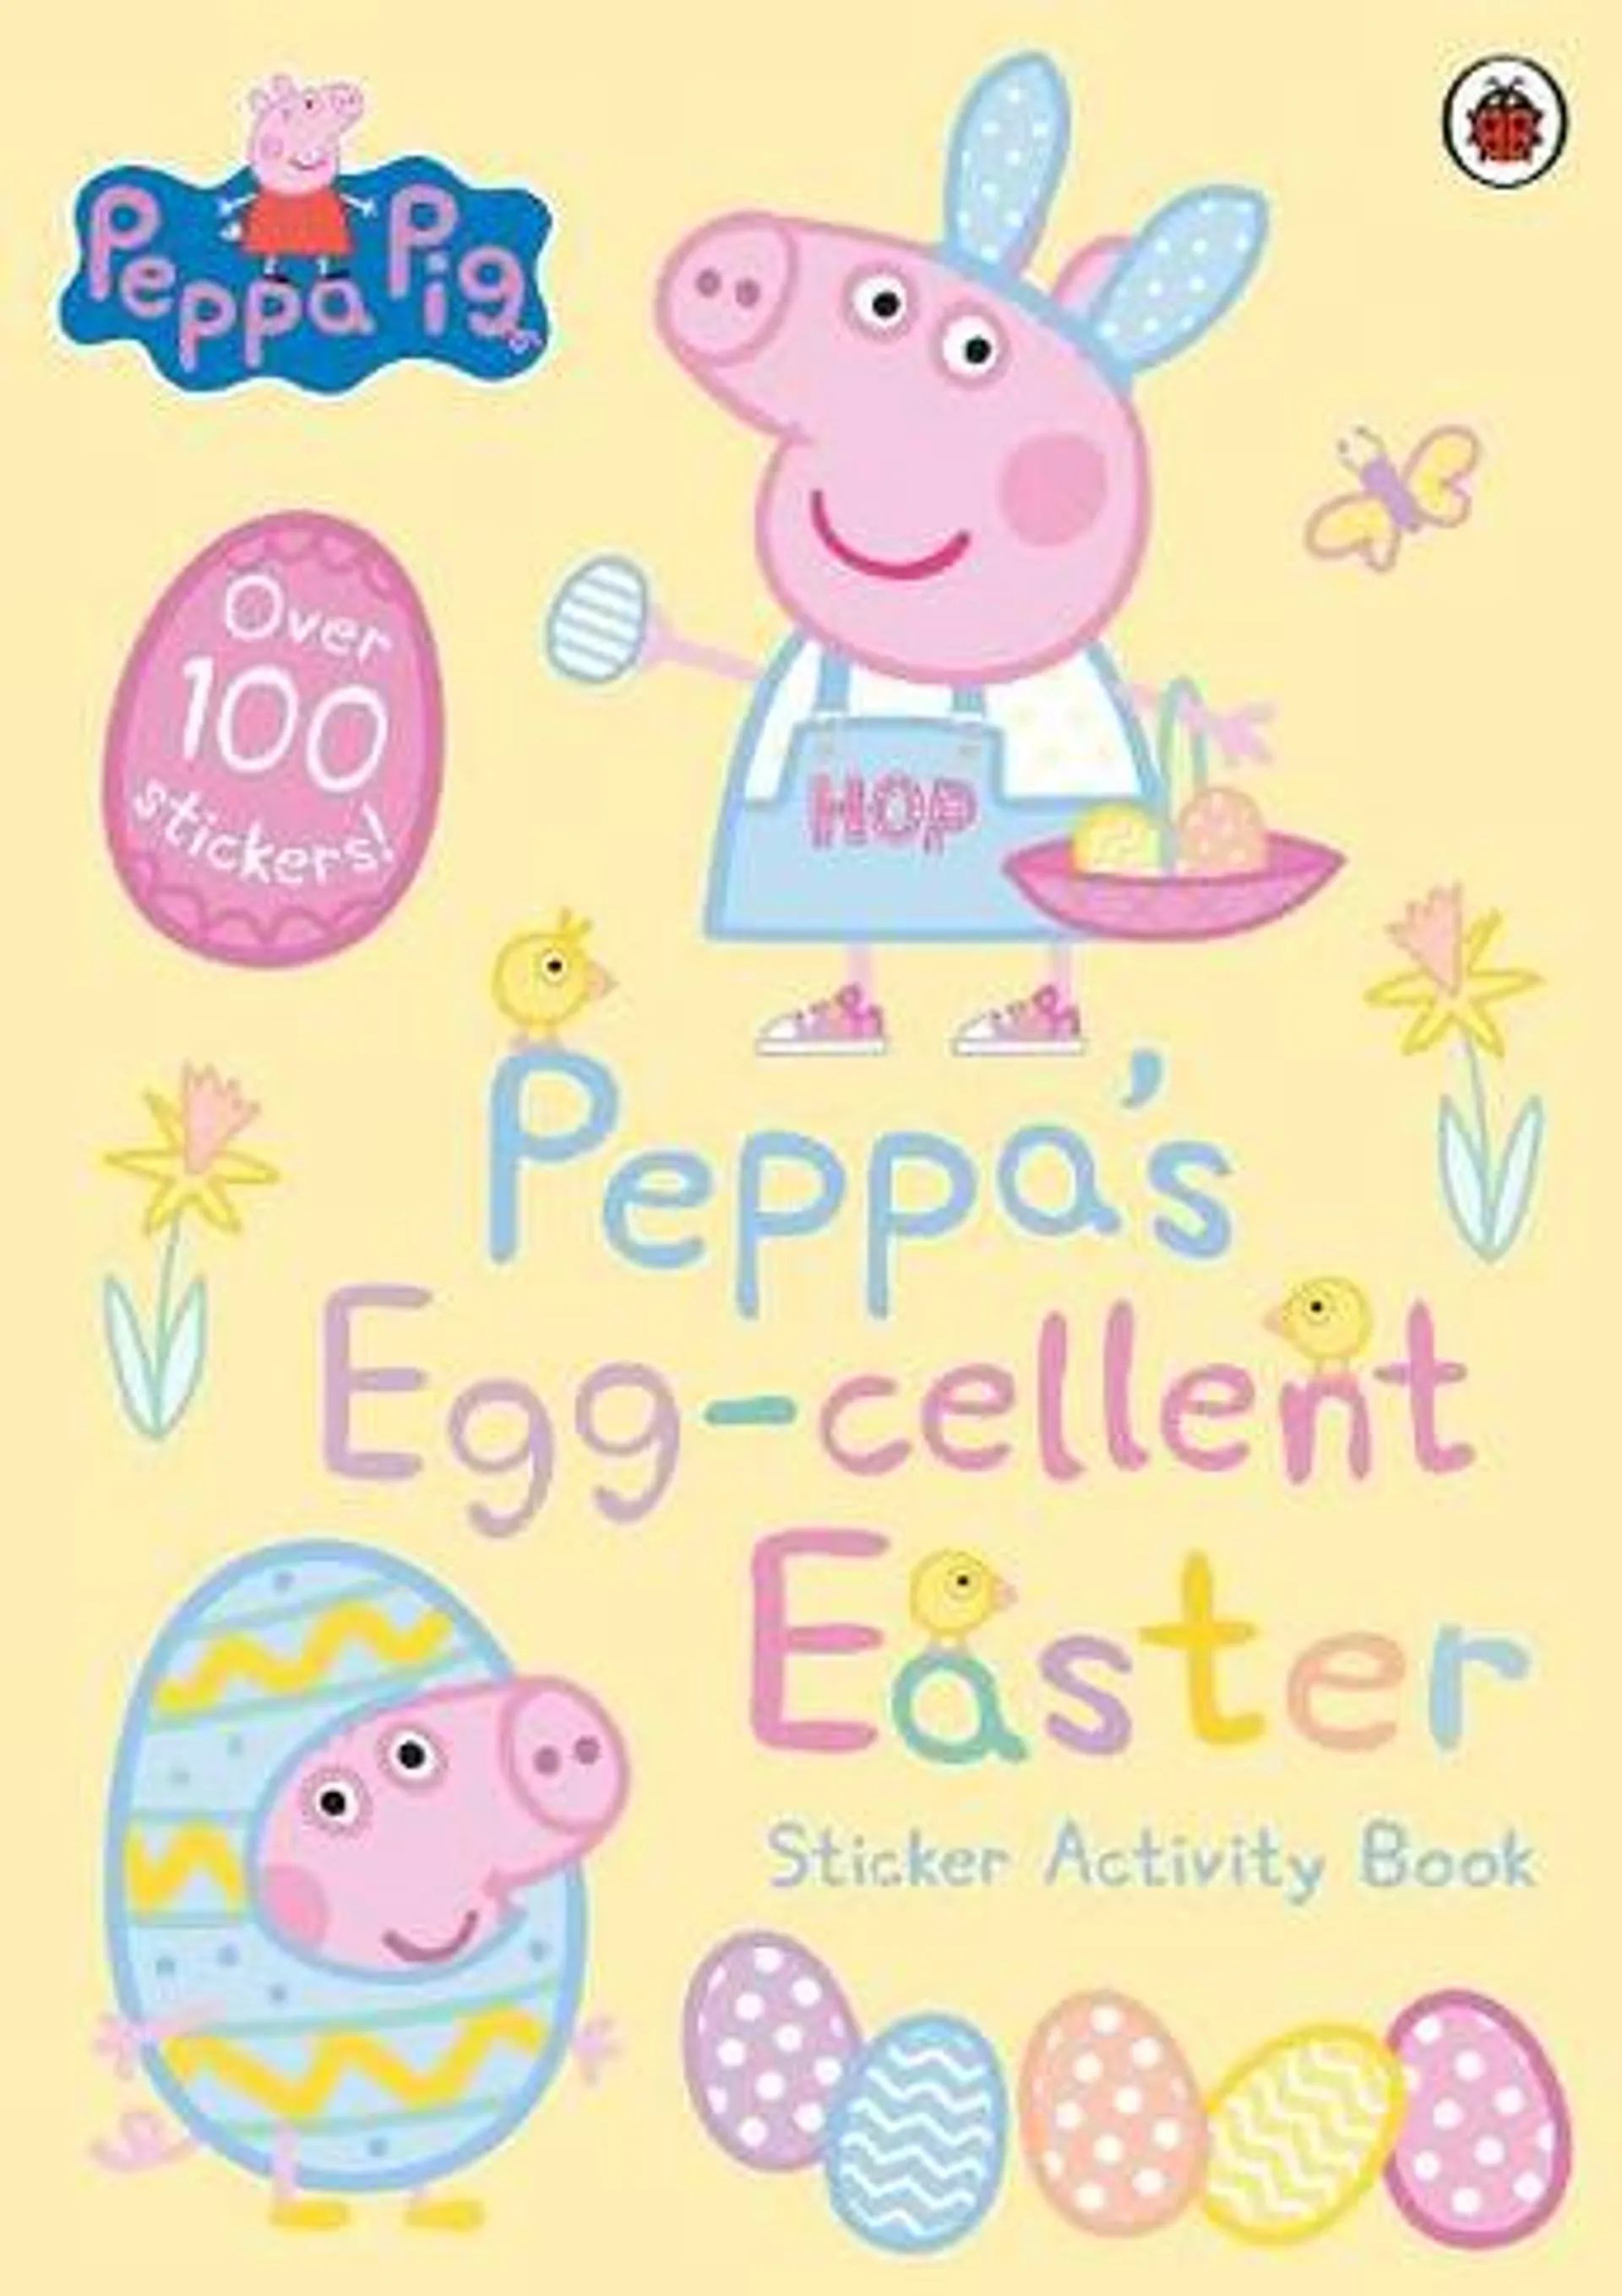 Peppa Pig: Peppa's Egg-cellent Easter Sticker Activity Book: (Peppa Pig)